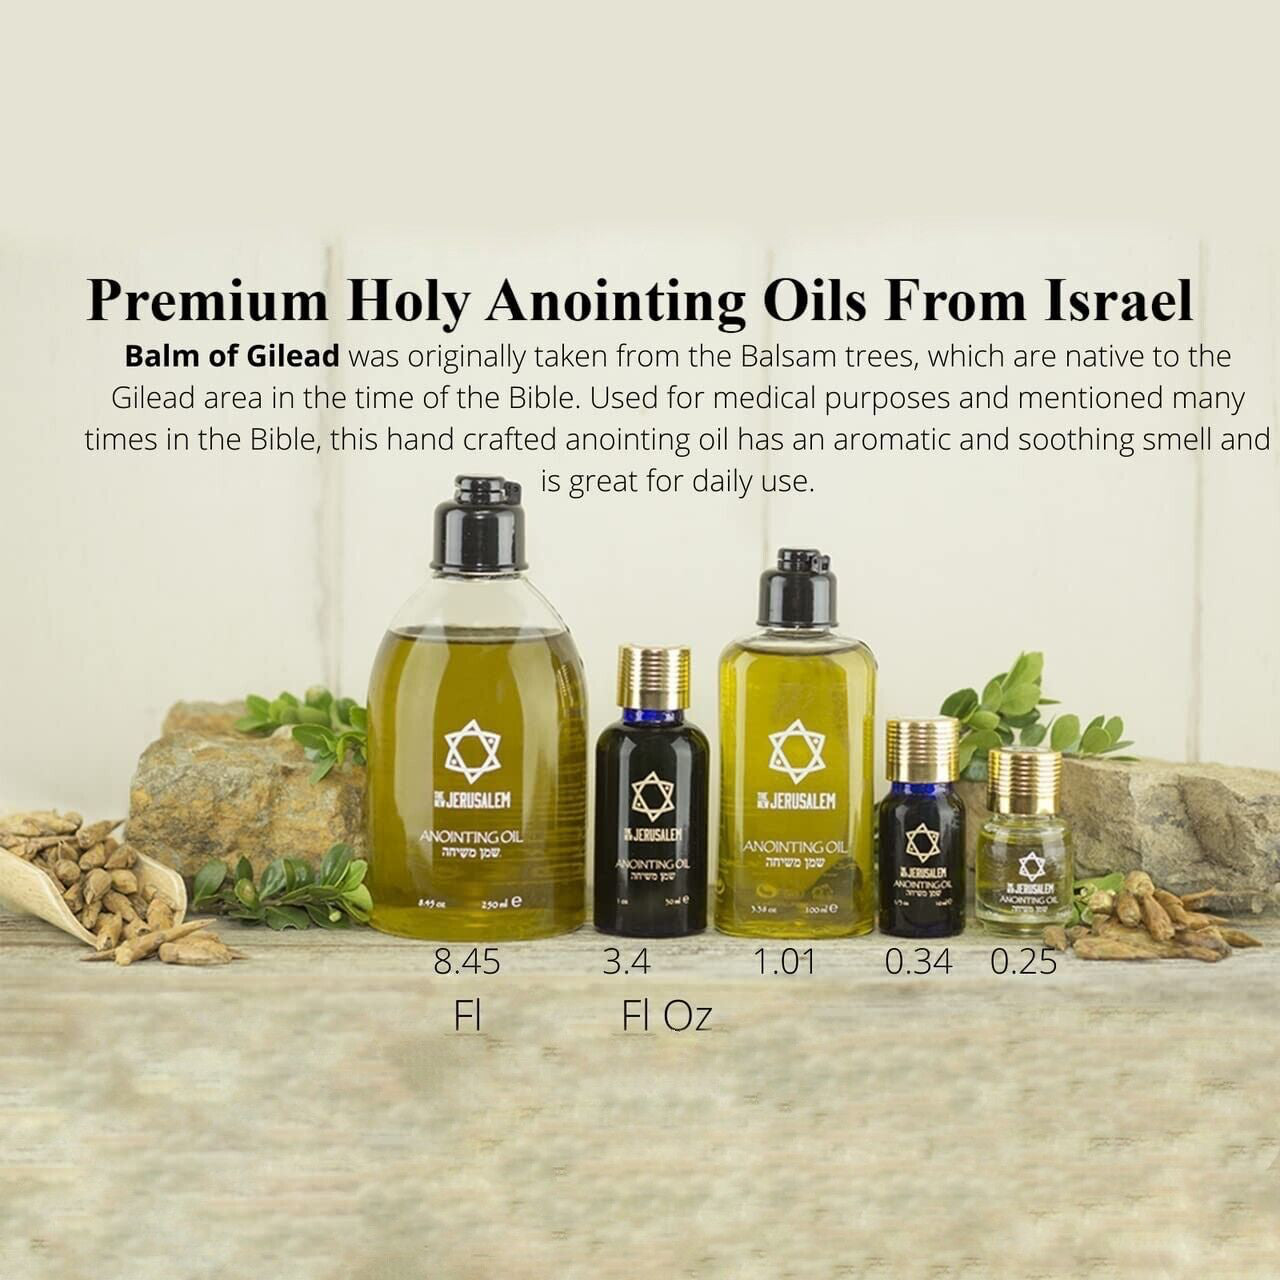 Anointing Oil Cassia 7.5 ml - 0.25 oz. From Holyland Jerusalem handmade